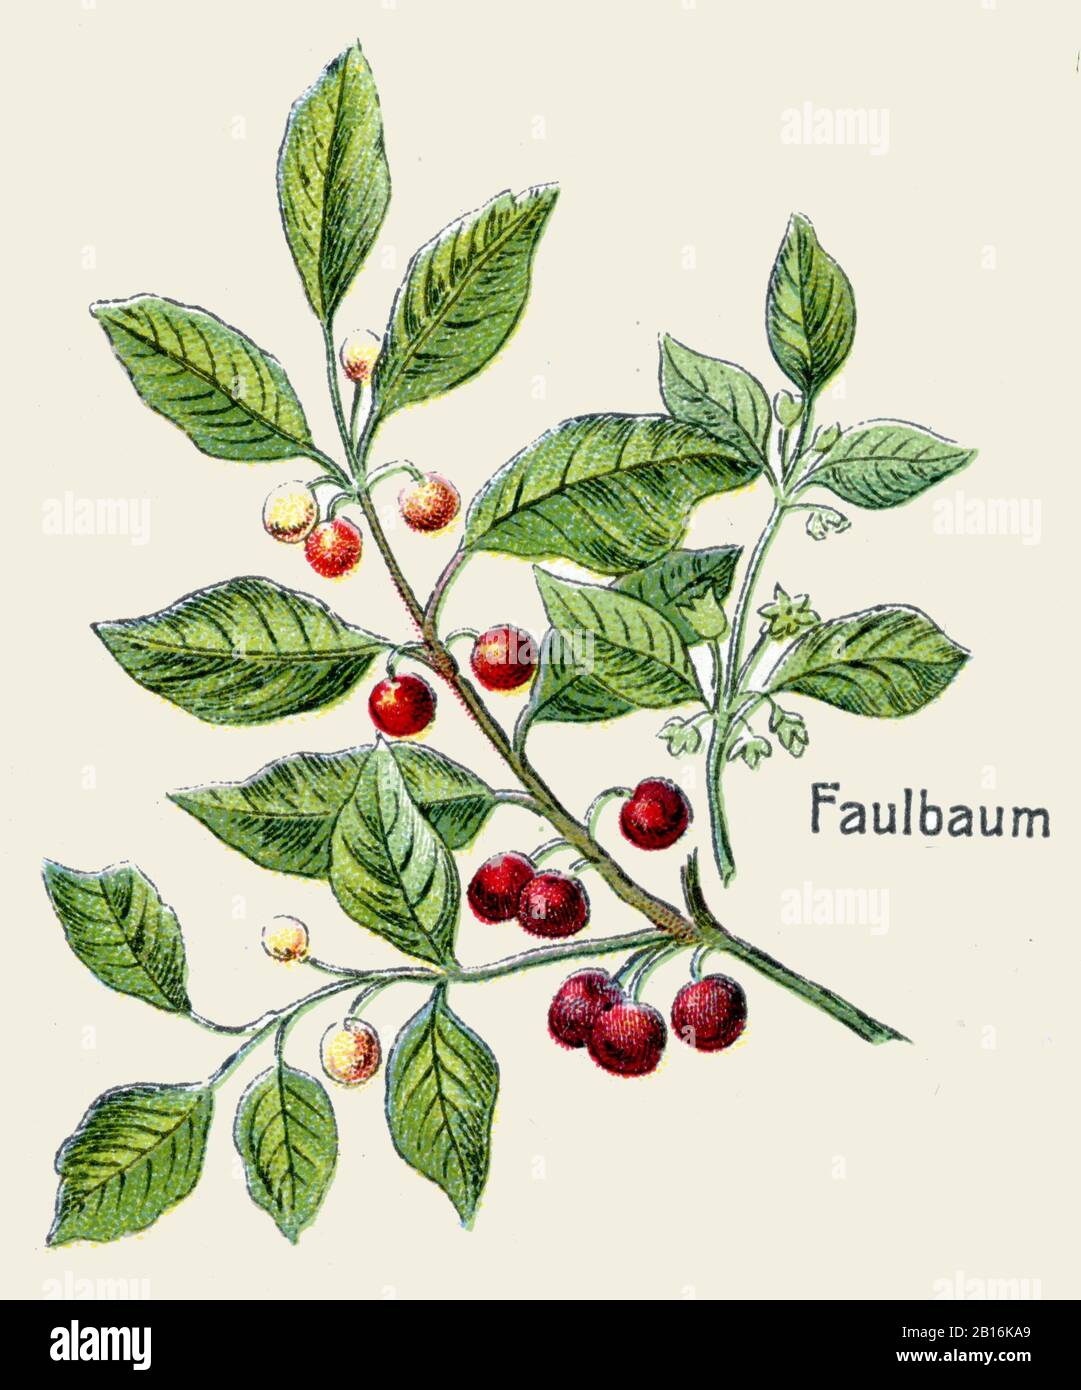 alder buckthorn, Frangula alnus Syn. Rhamnus frangula, Faulbaum, Bourdaine,  (botany book, 1908) Stock Photo